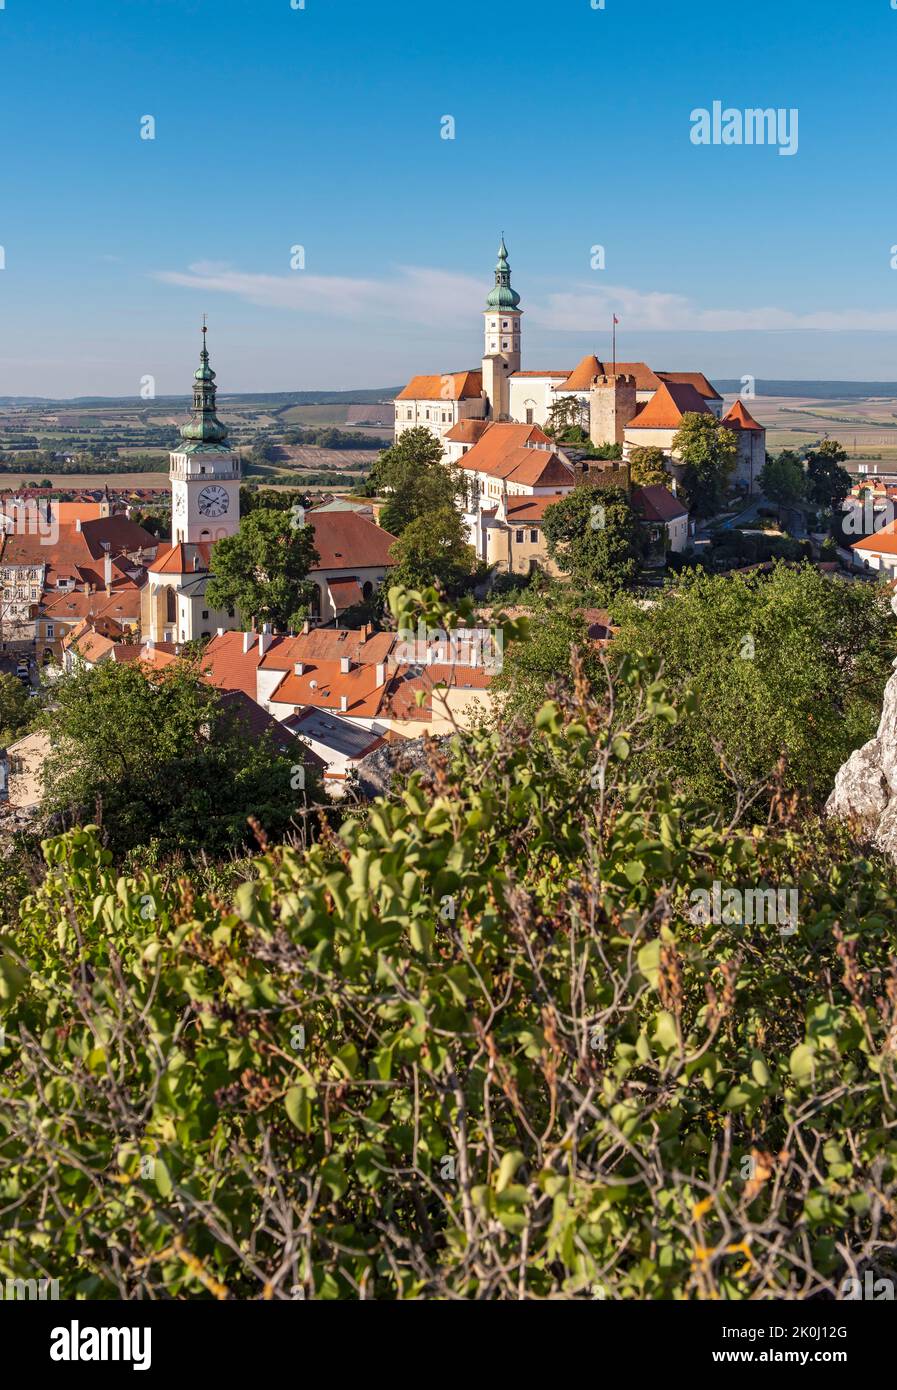 Old town centre and castle, Mikulov, Czech Republic Stock Photo